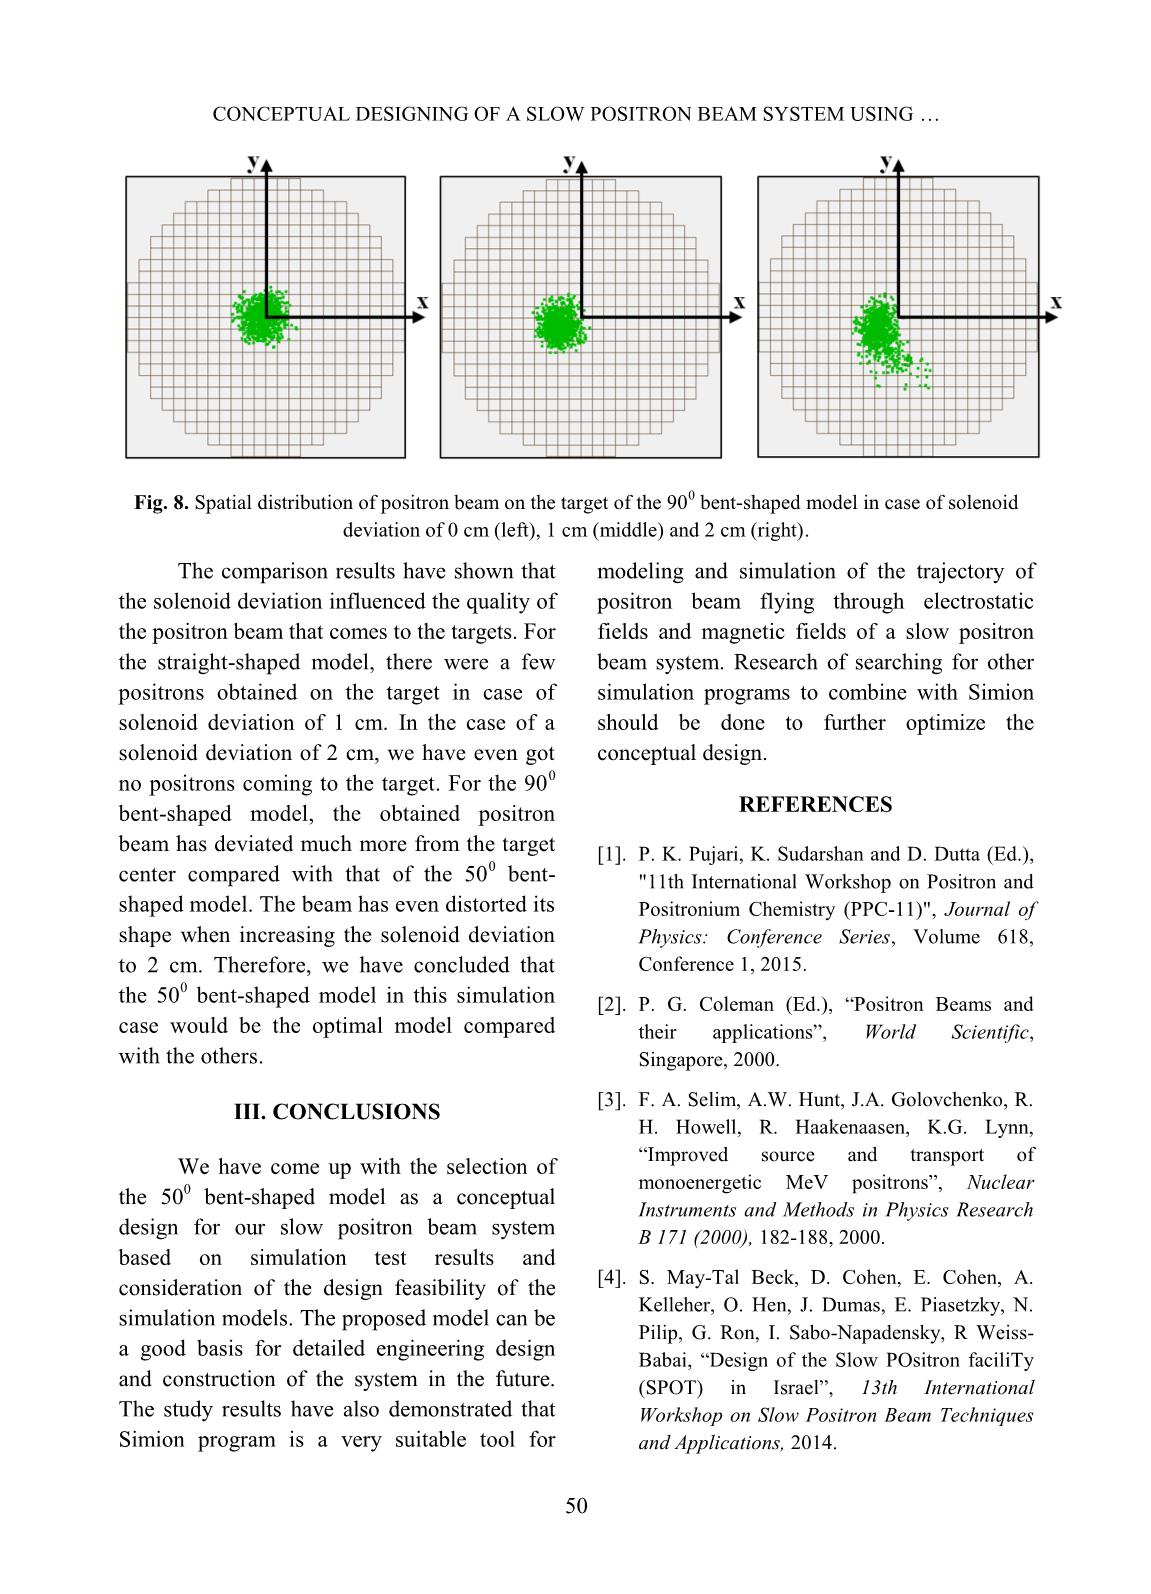 Conceptual designing of a slow positron beam system using Simion simulation program trang 6